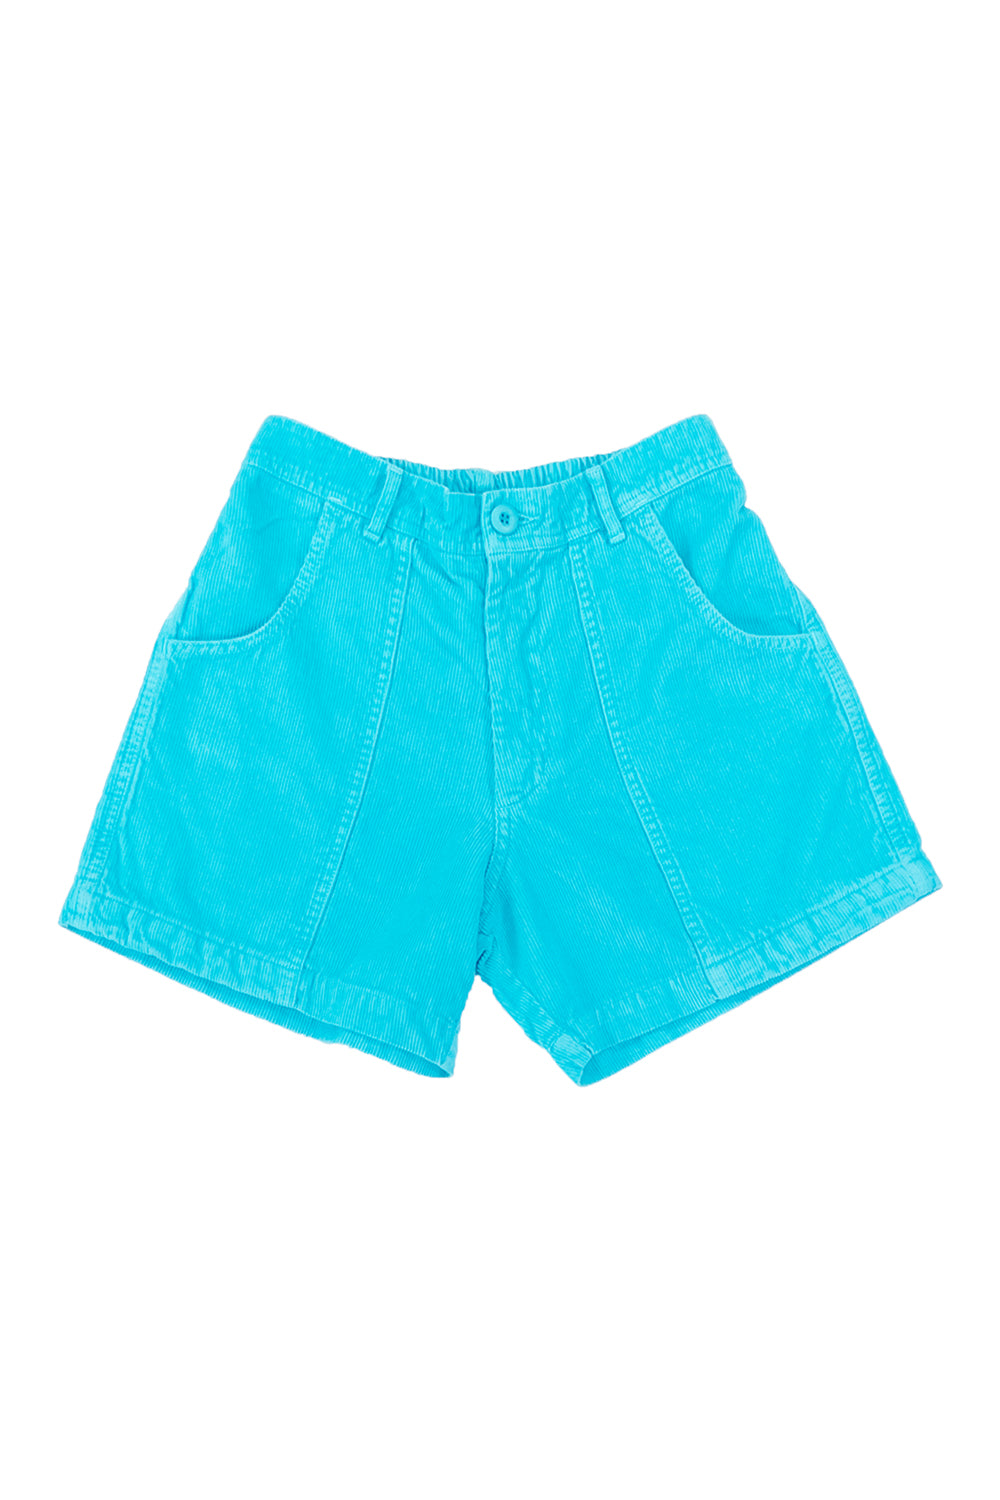 Cabuya Cord Short | Jungmaven Hemp Clothing & Accessories / Color: Caribbean Blue